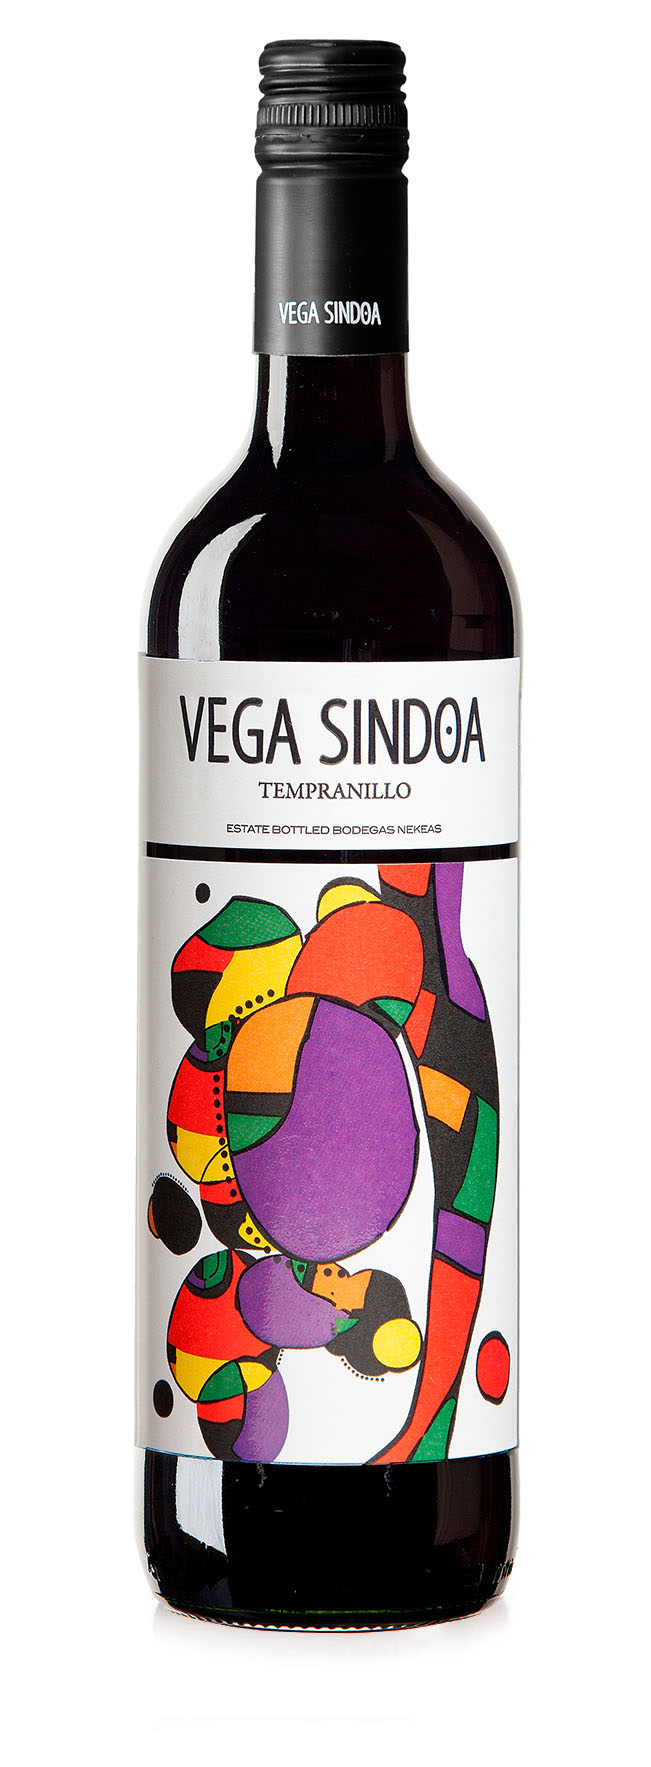 Vega Sindoa Tempranillo Bottle Photo